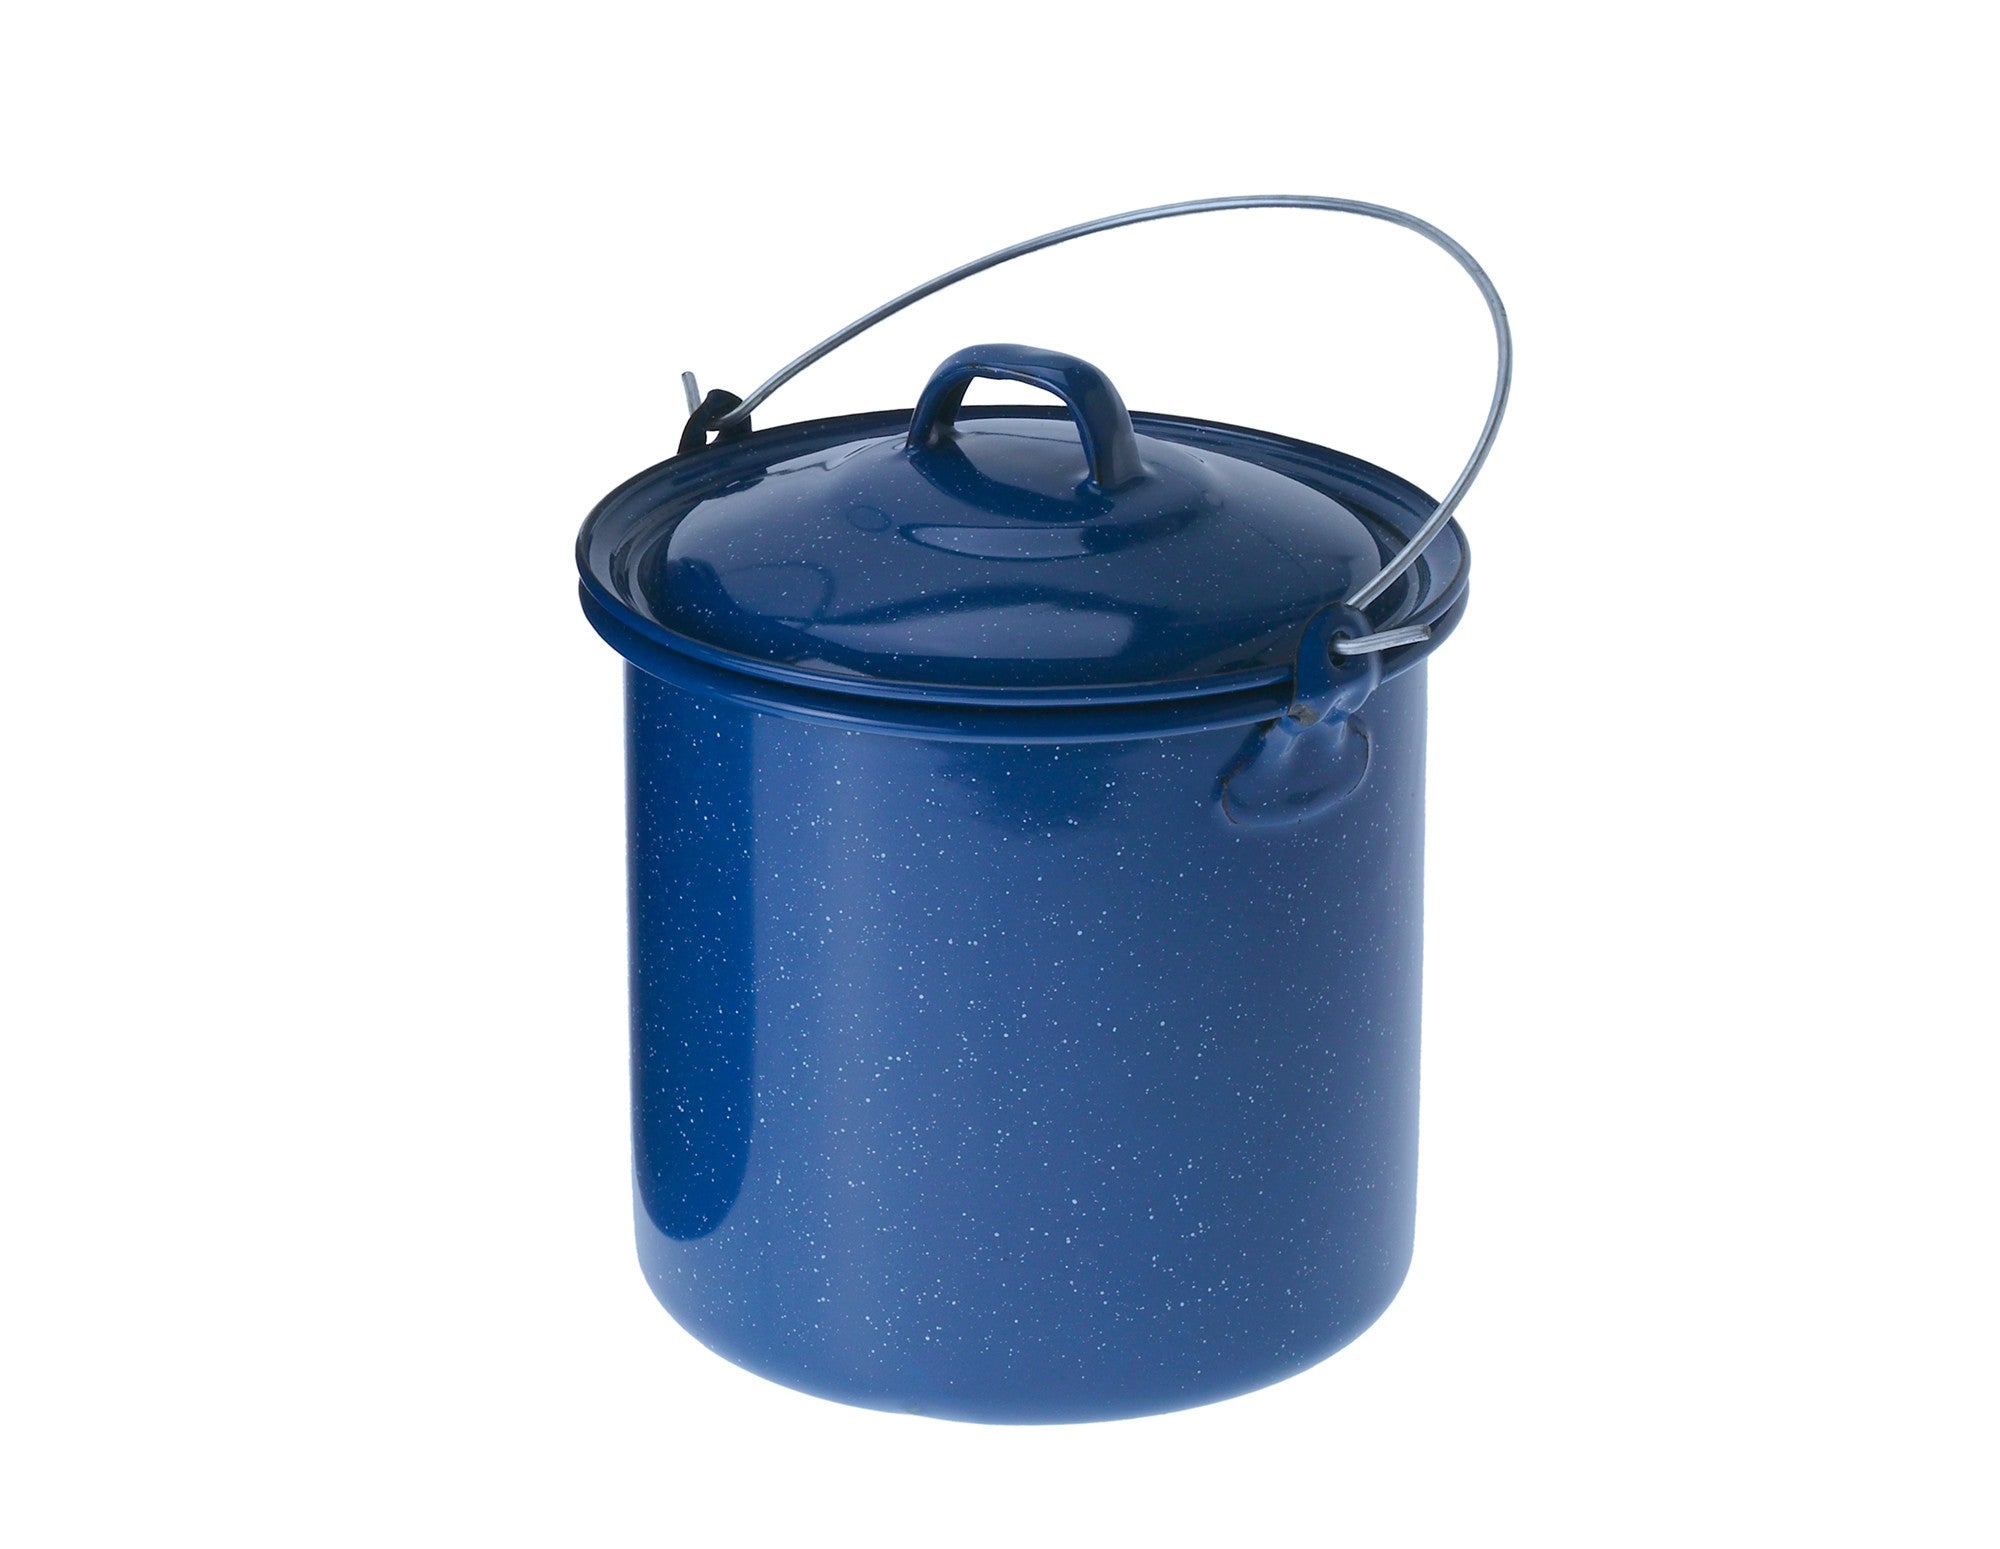 We carry Cookware, Stock Pot Enamel Steel 15qt (CPE)